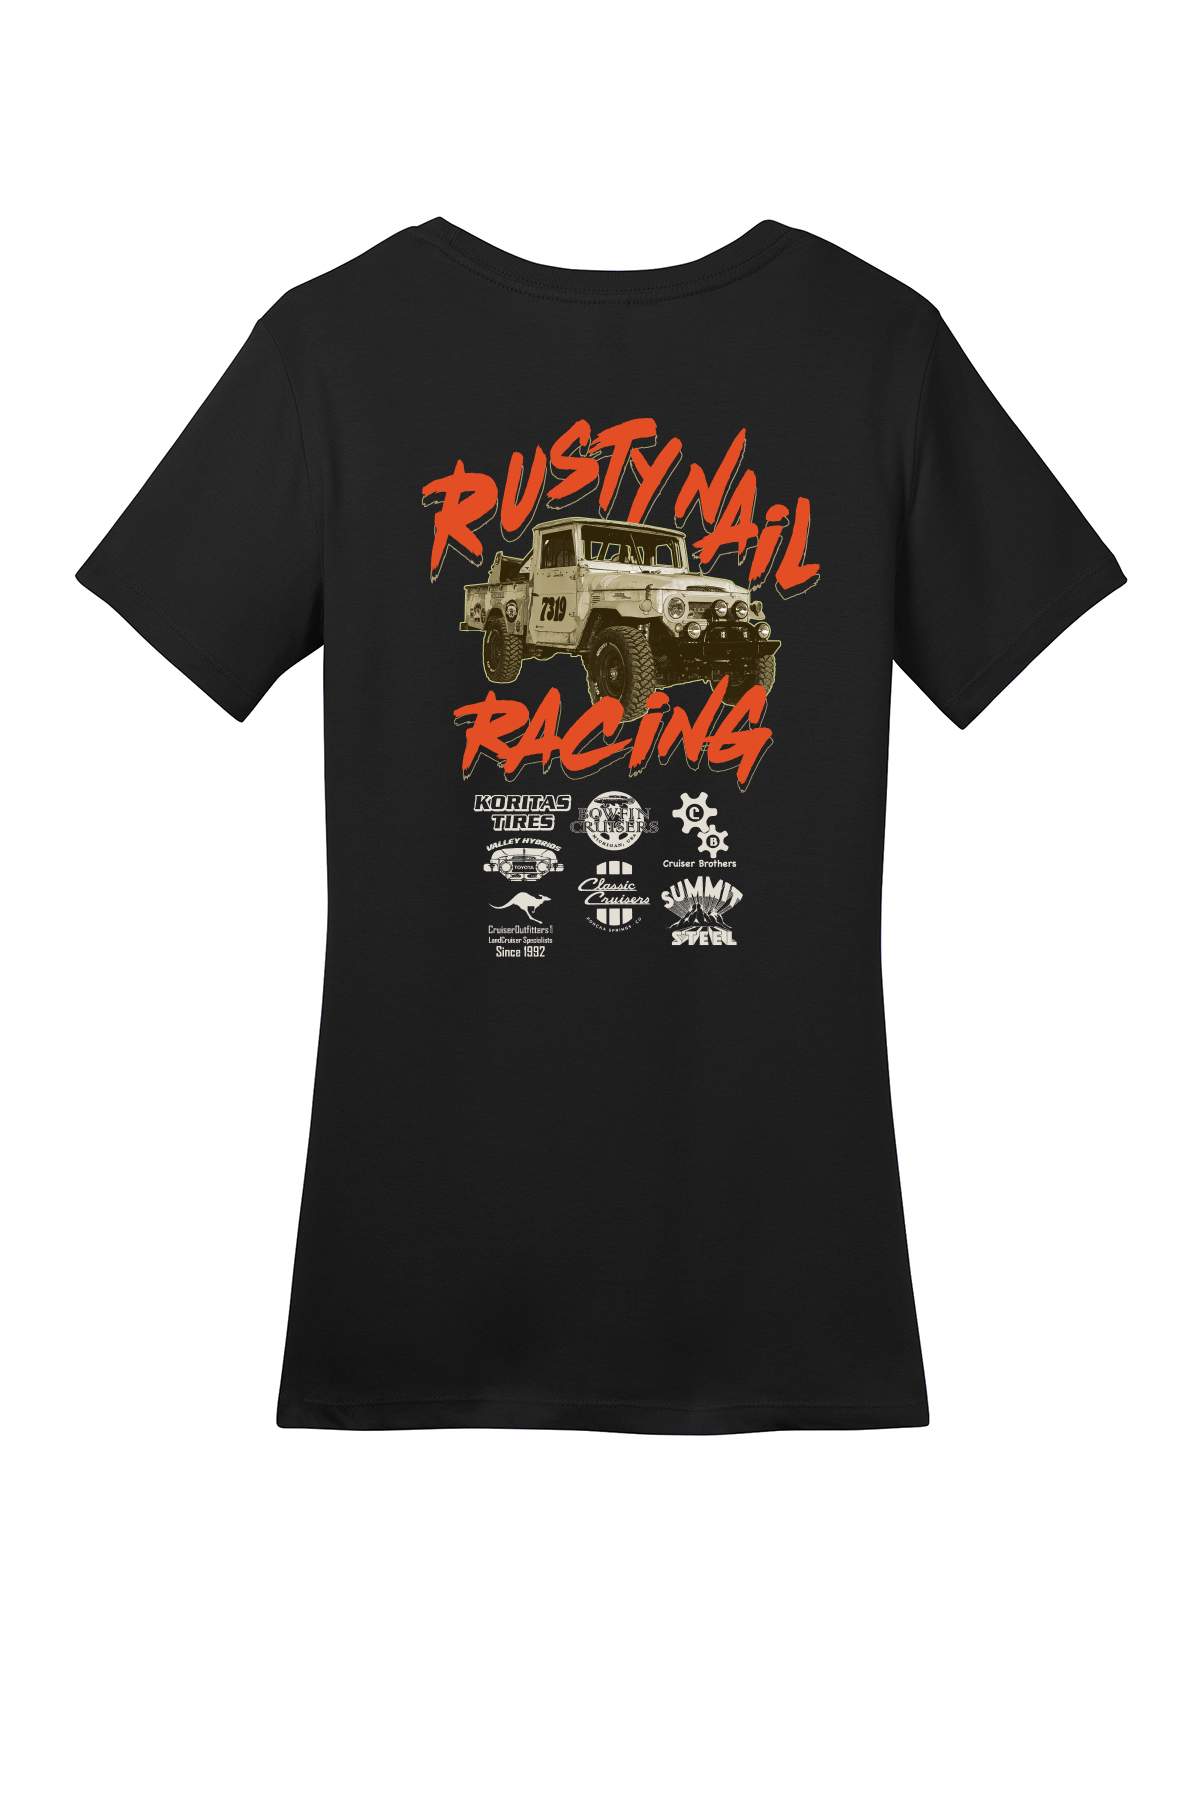 Team Rusty Nail Racing #7319